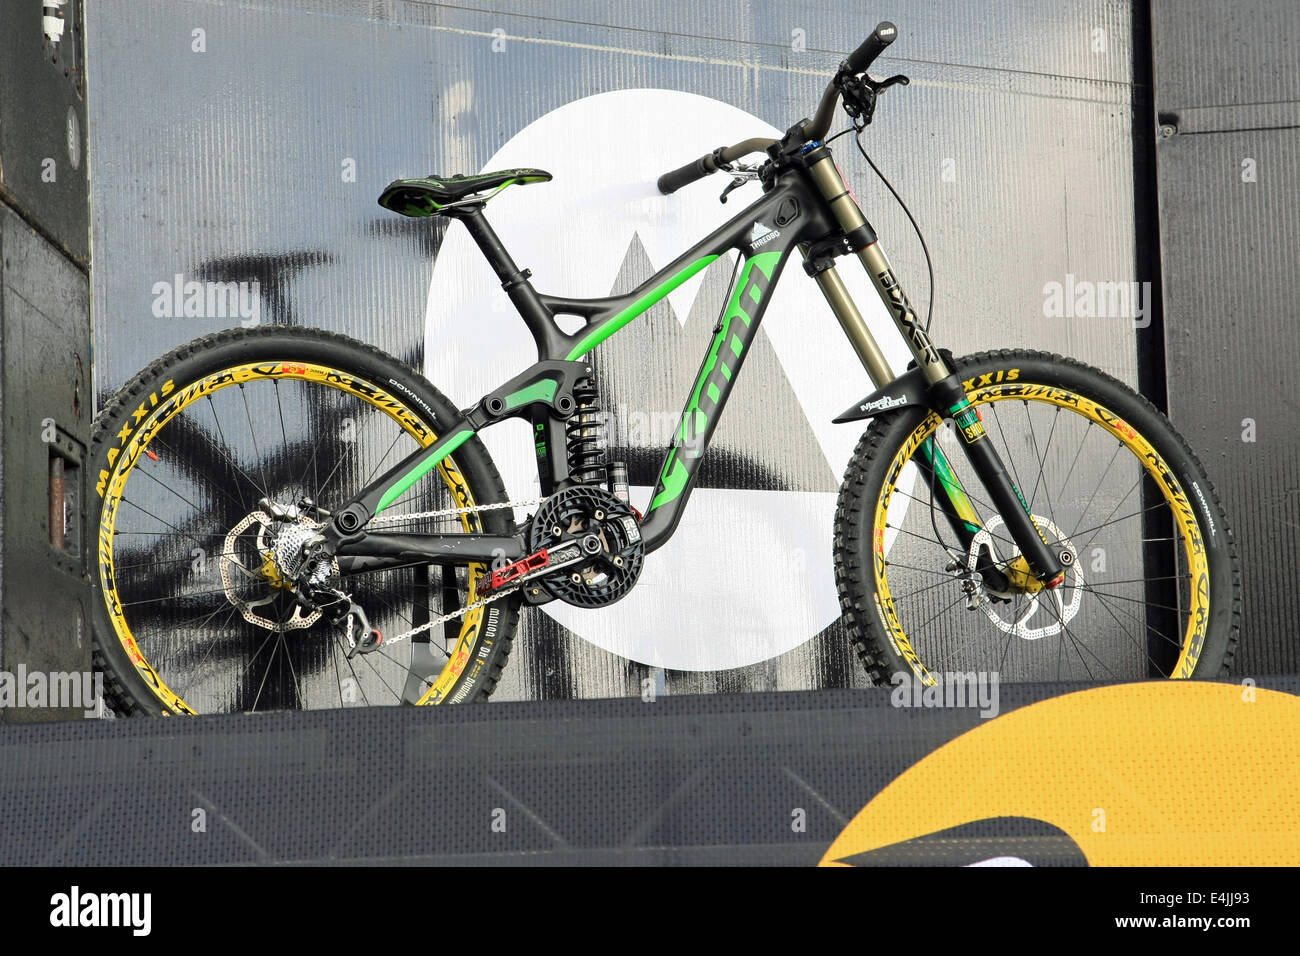 Kona bike hi-res stock photography and images - Alamy